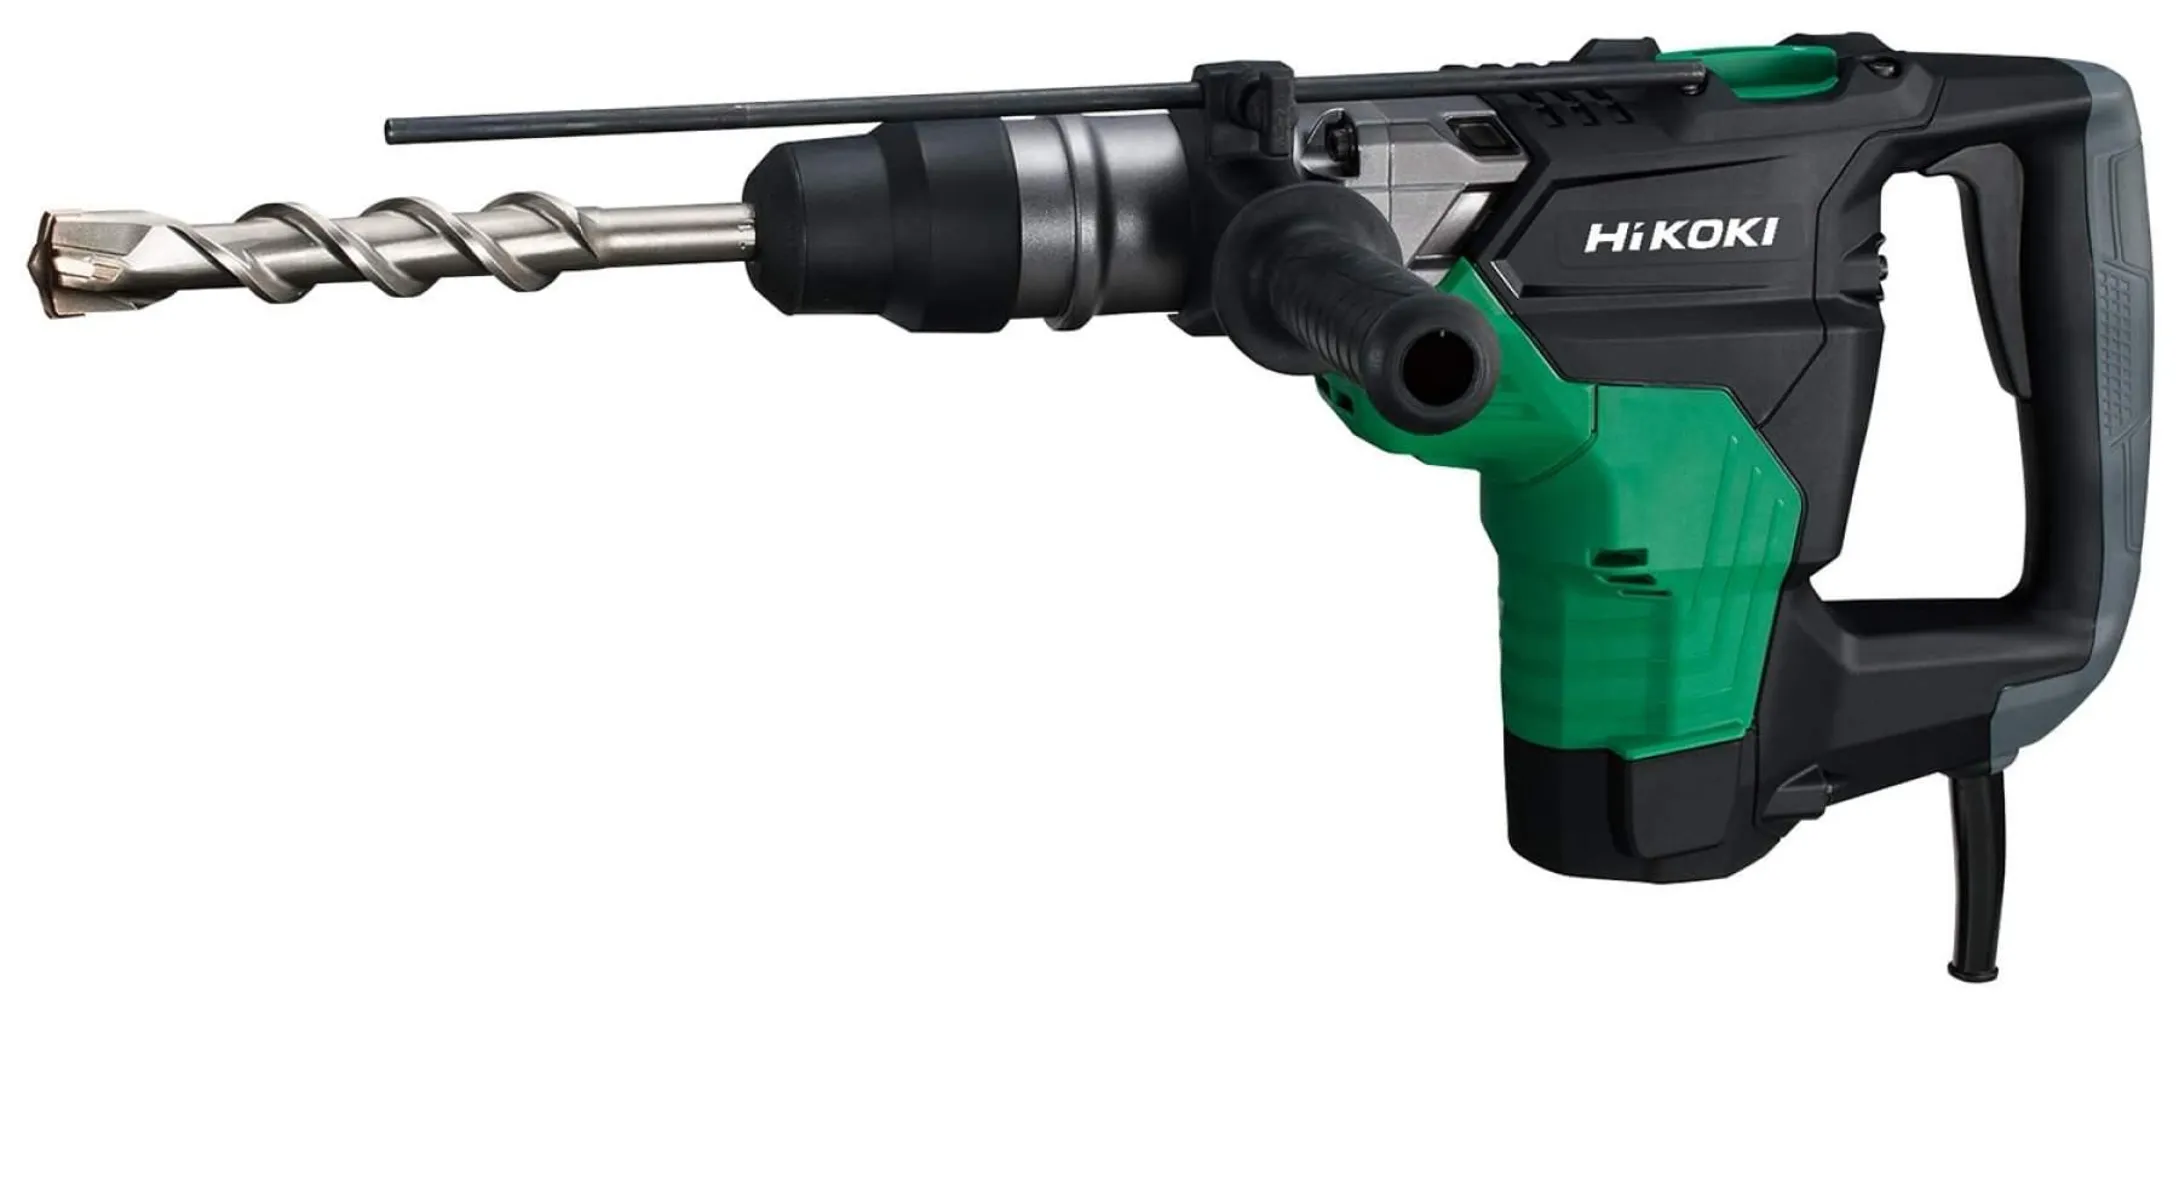 HiKOKI DH40MC 1100W SDS Max Demolition Hammer Drill 240V